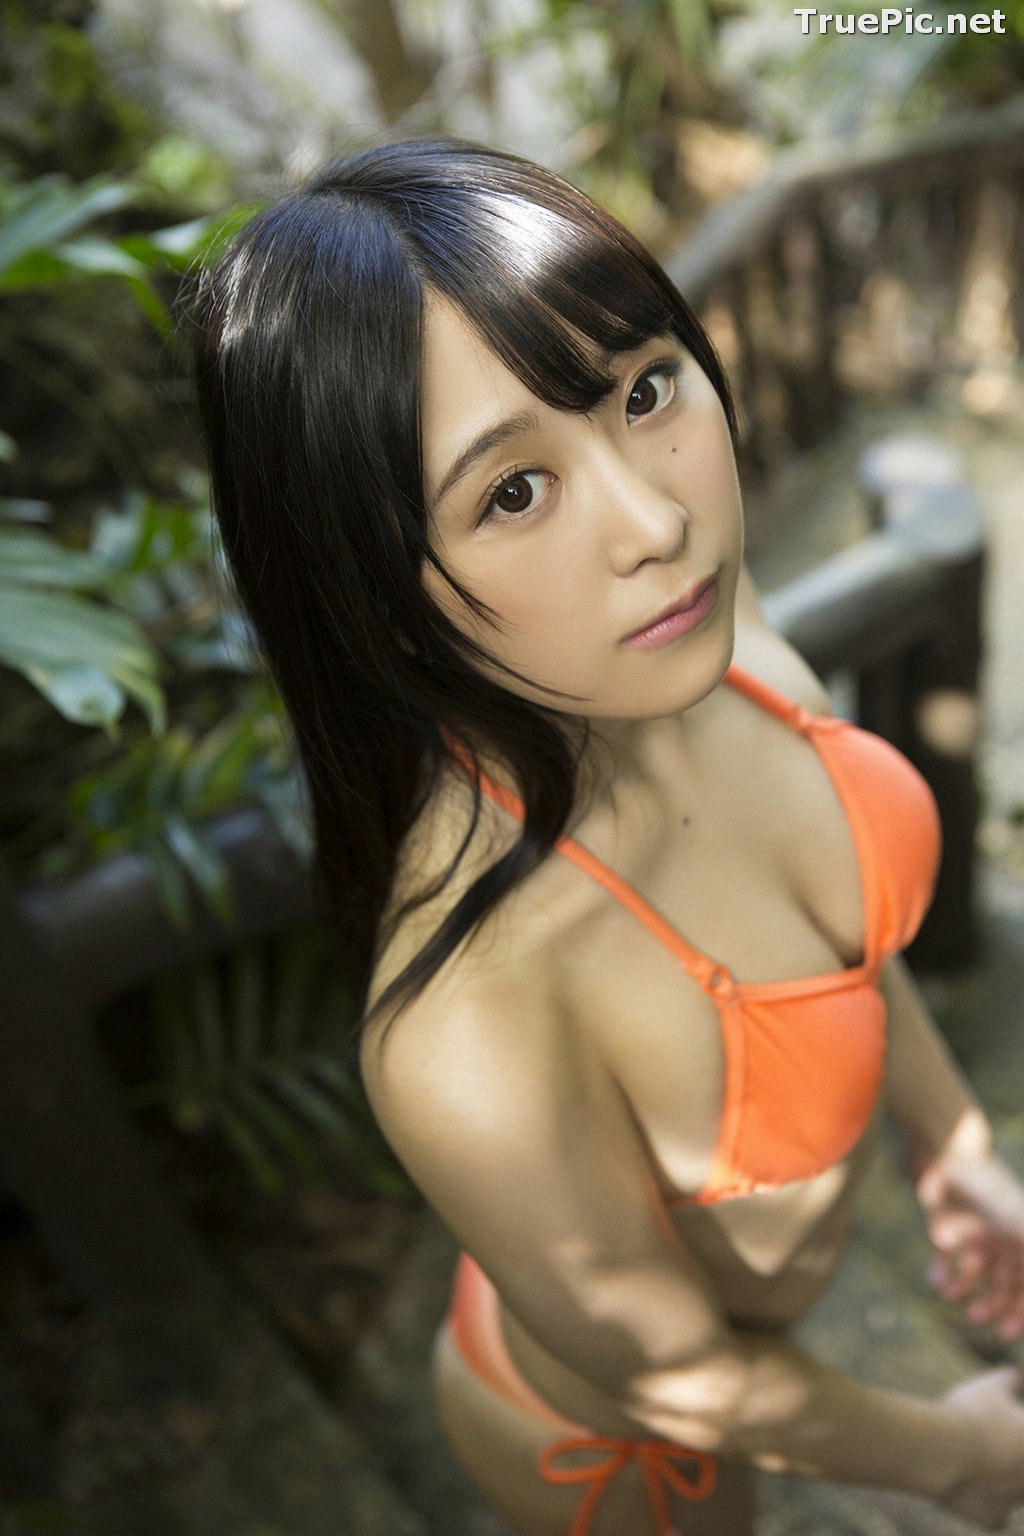 Image Japanese Model - Naomi Majima (真島なおみ) - YS Web Vol.851 - TruePic.net (100 pictures) - Picture-15